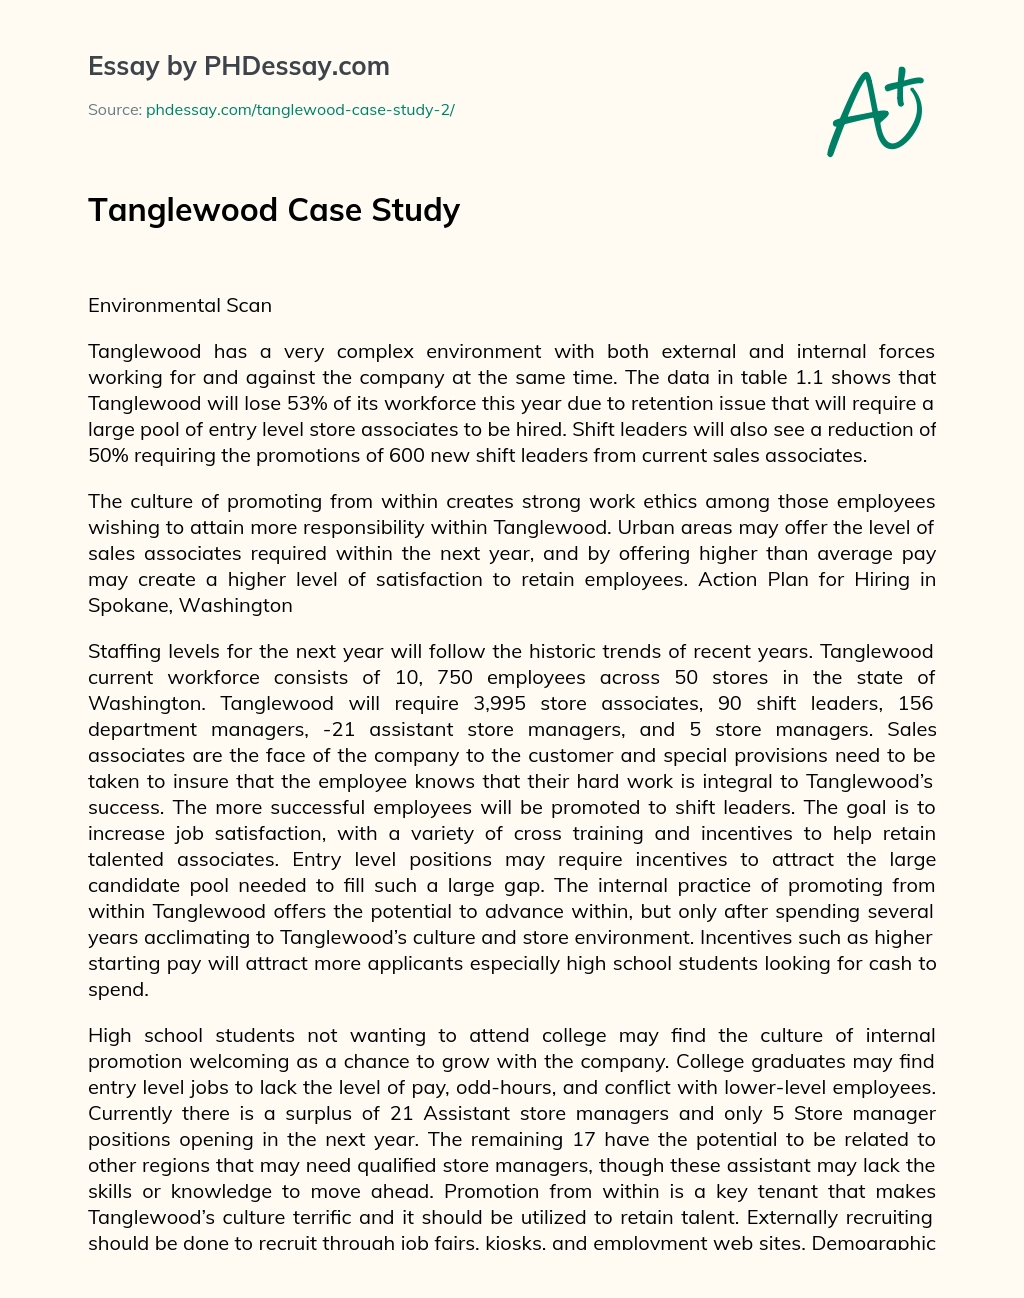 Tanglewood Case Study essay